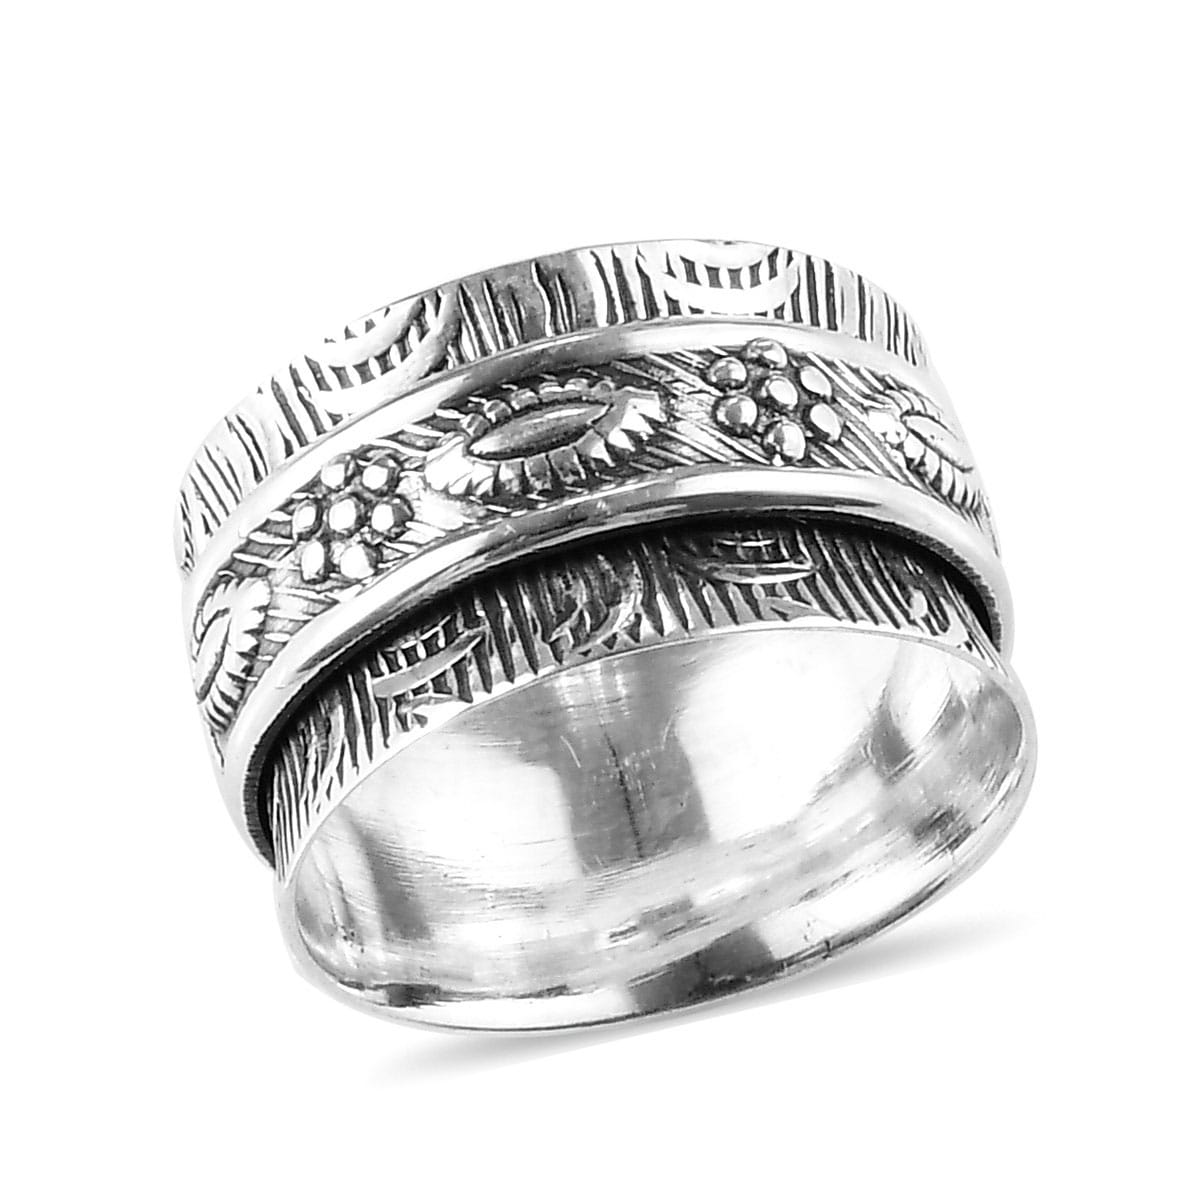 Elephant Ring 925 Sterling Silver Meditation Spinner Ring Handmade Statement 